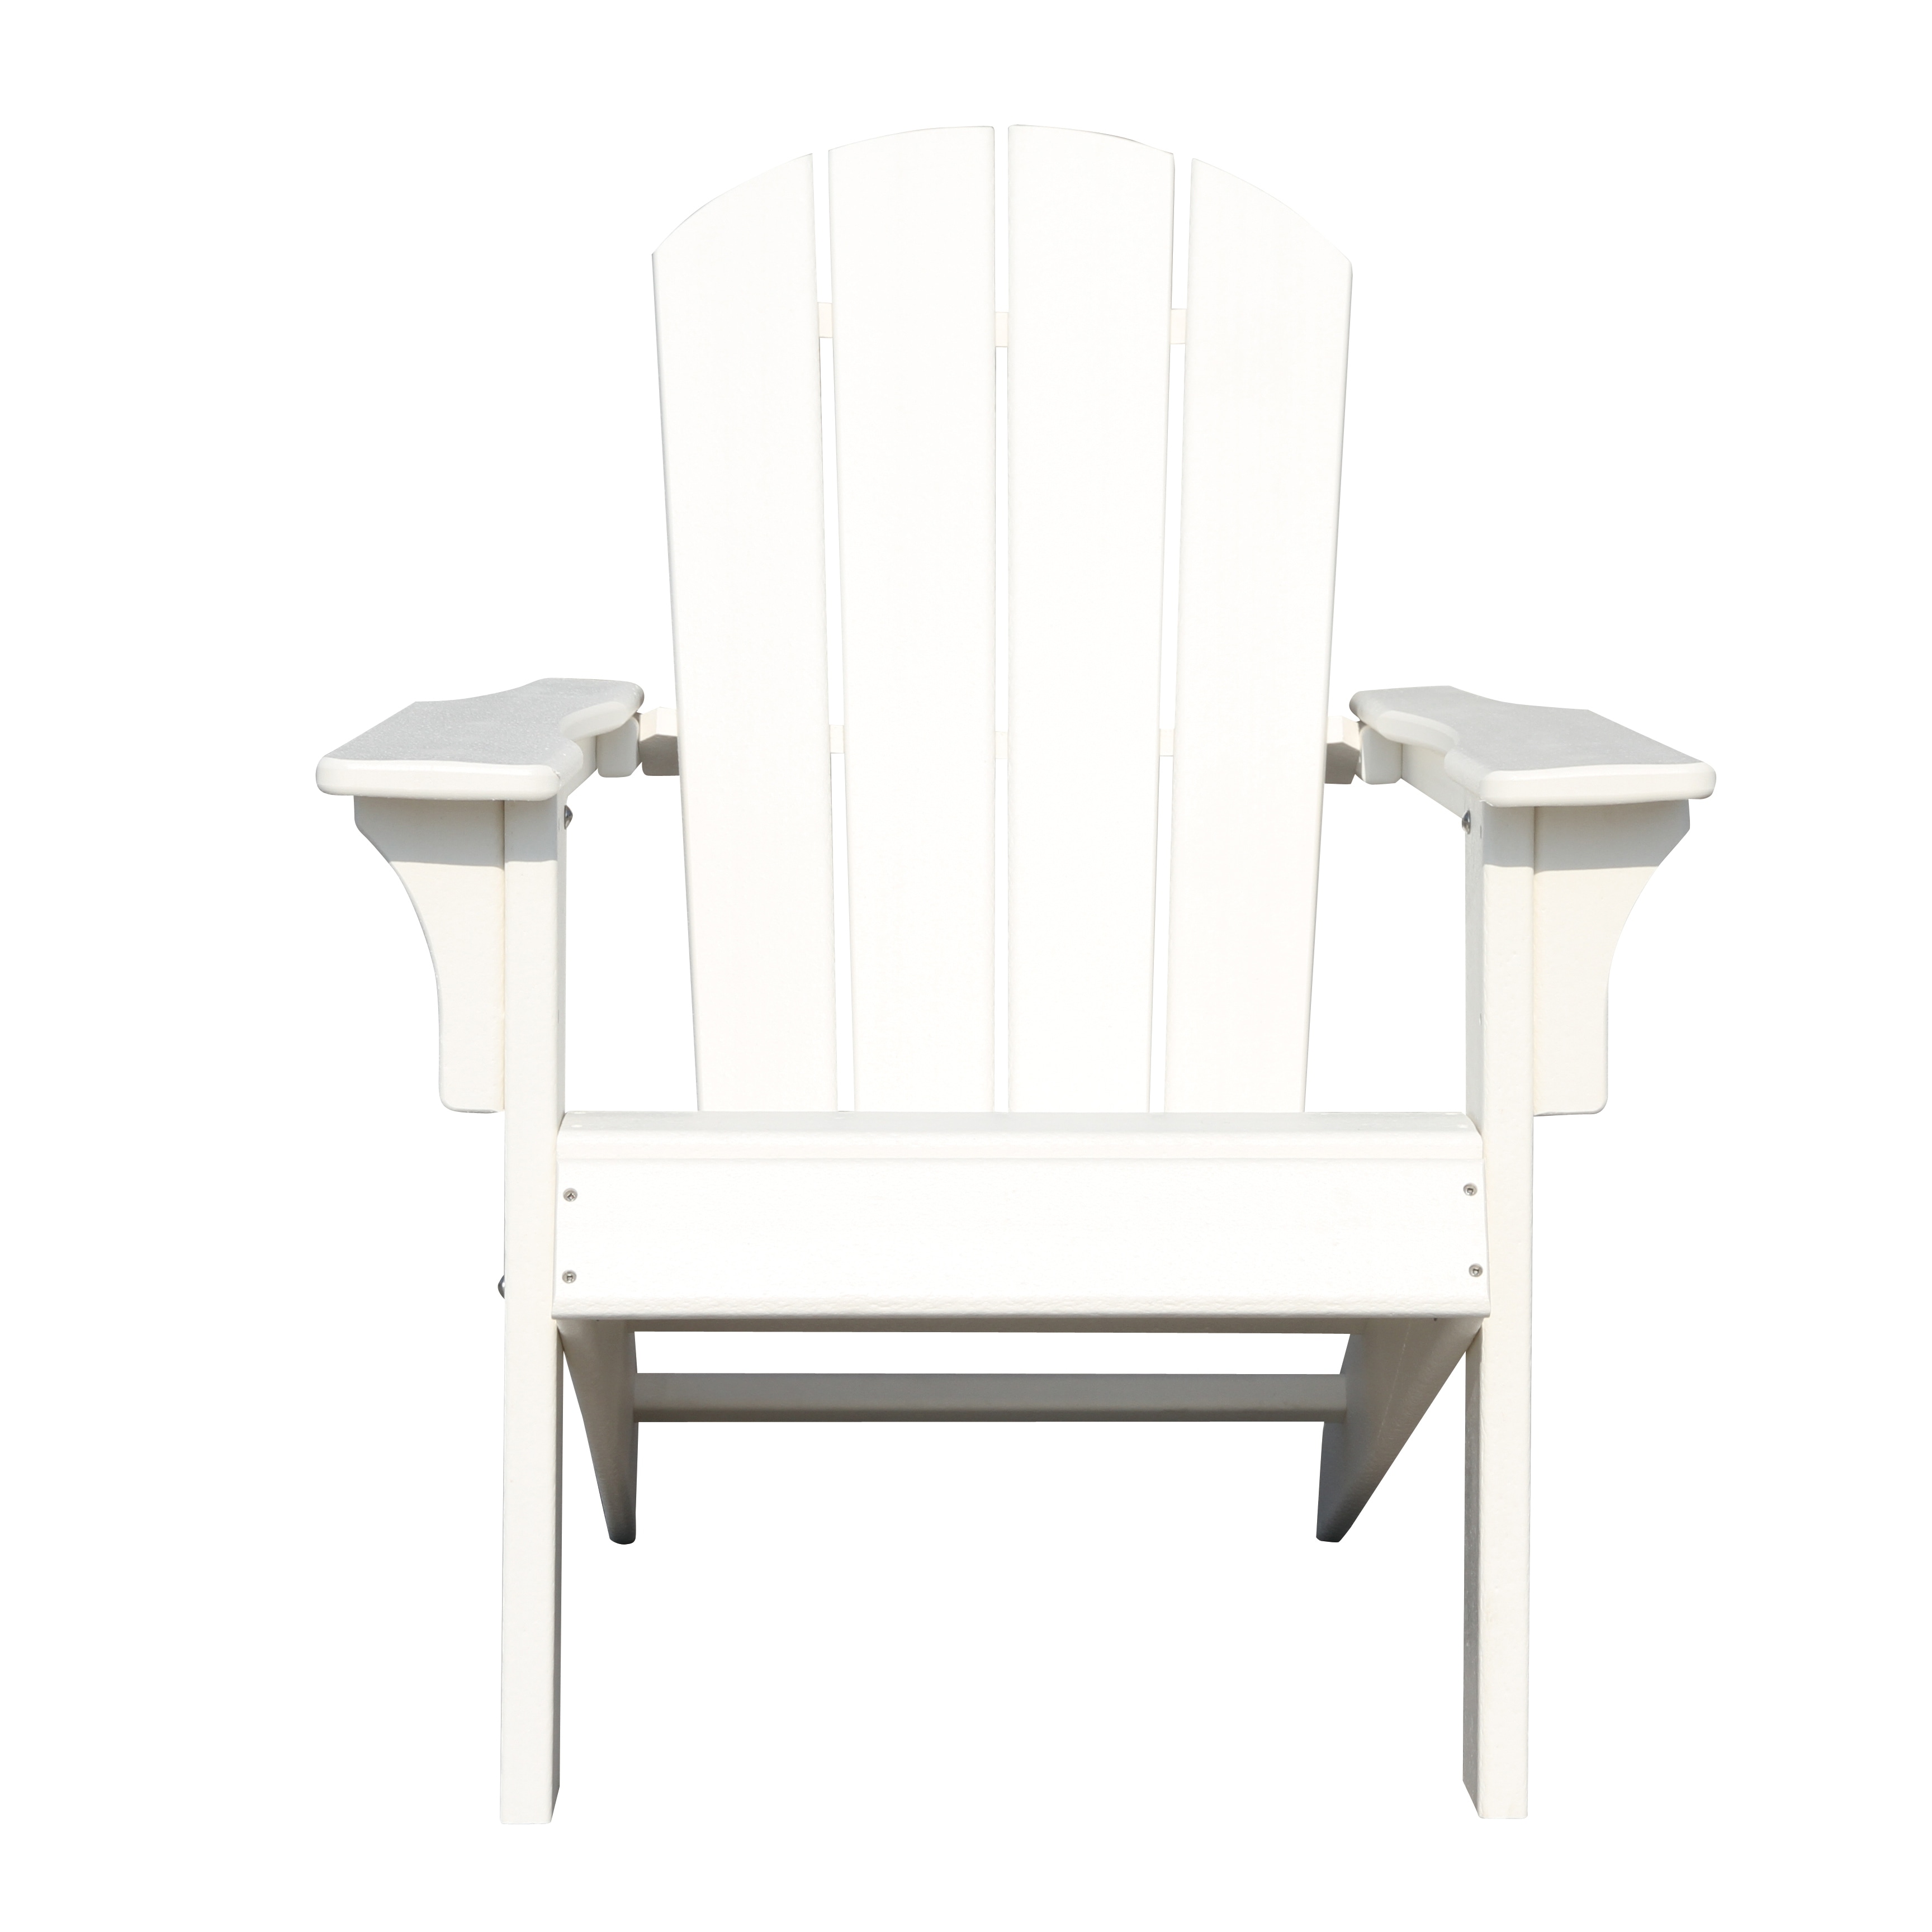 Starx Decor Classical Plastic Outdoor Patio Adirondack Chair